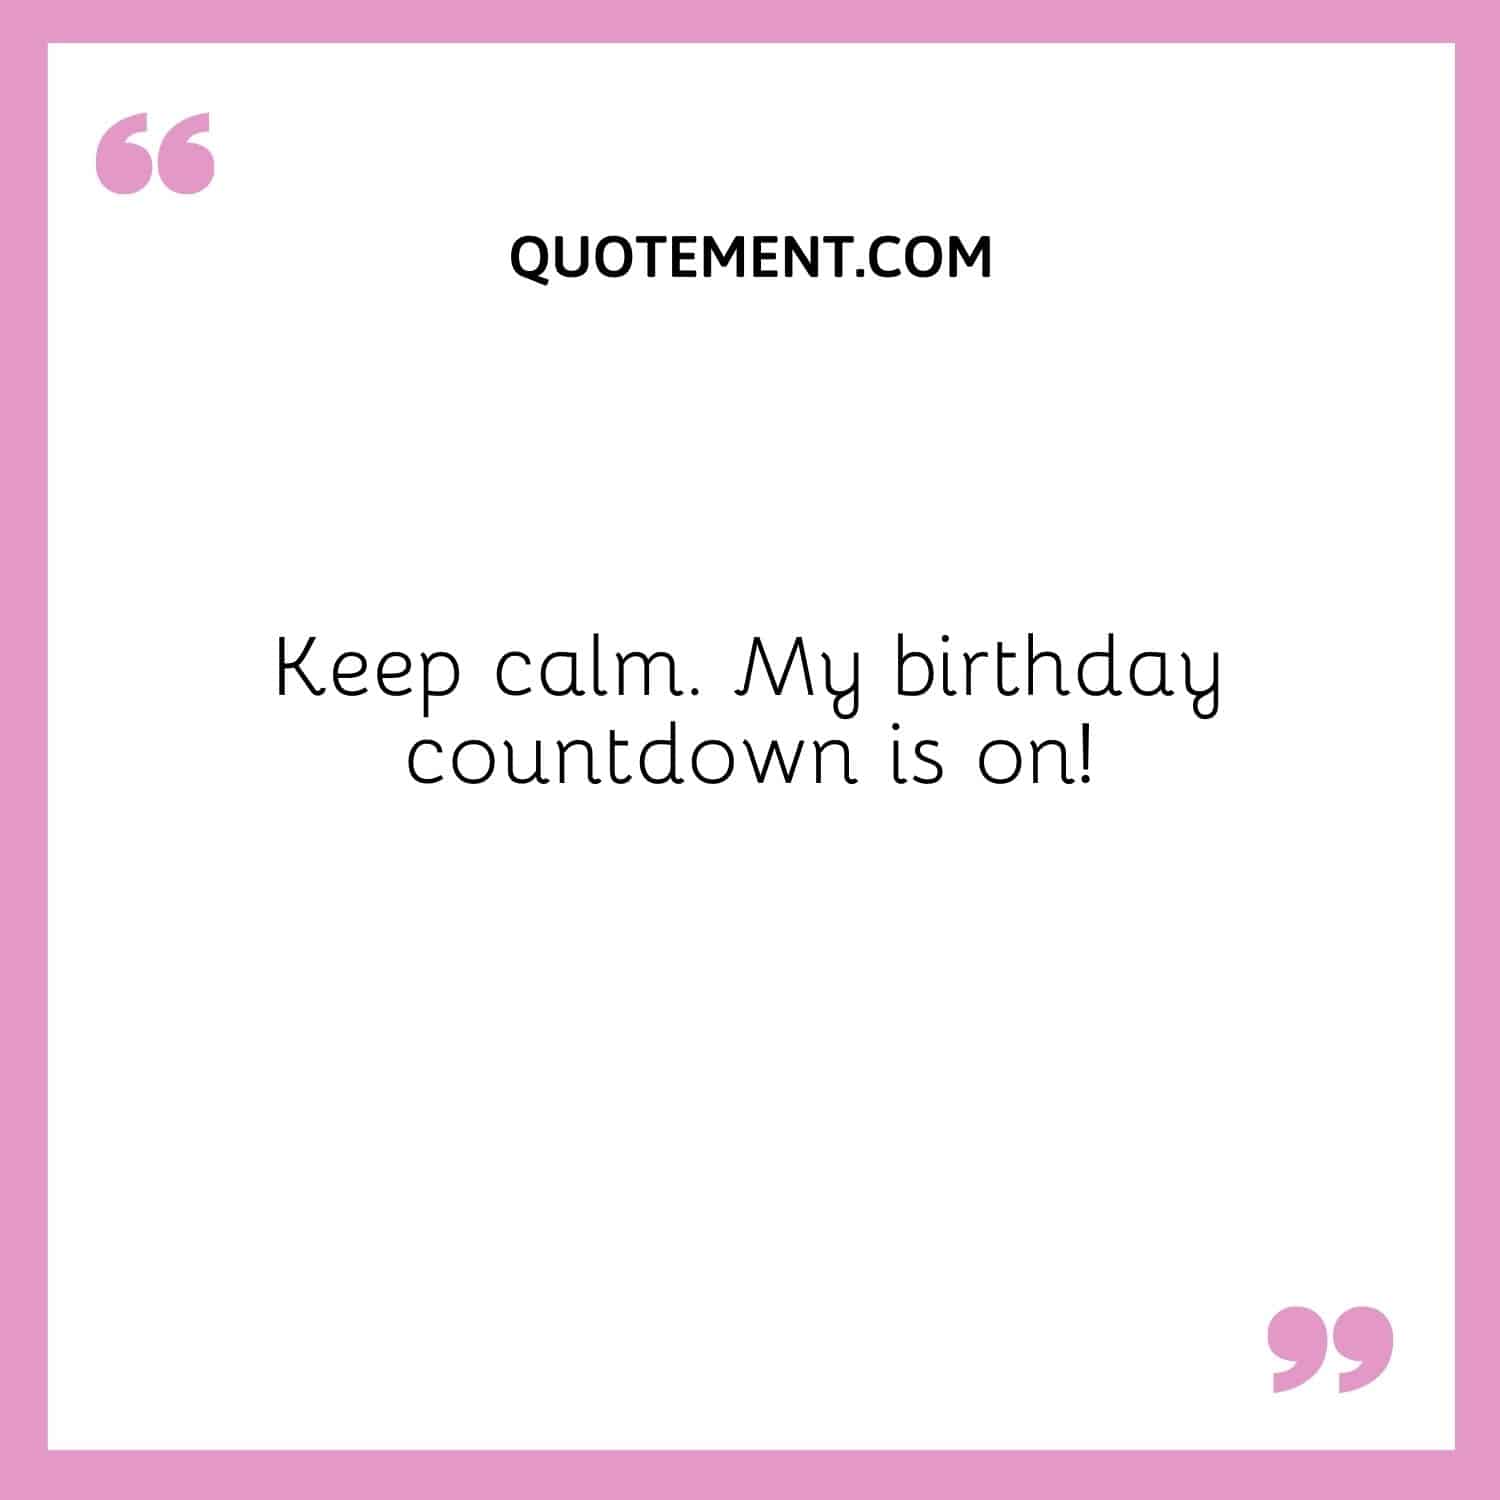 Keep calm. My birthday countdown is on!